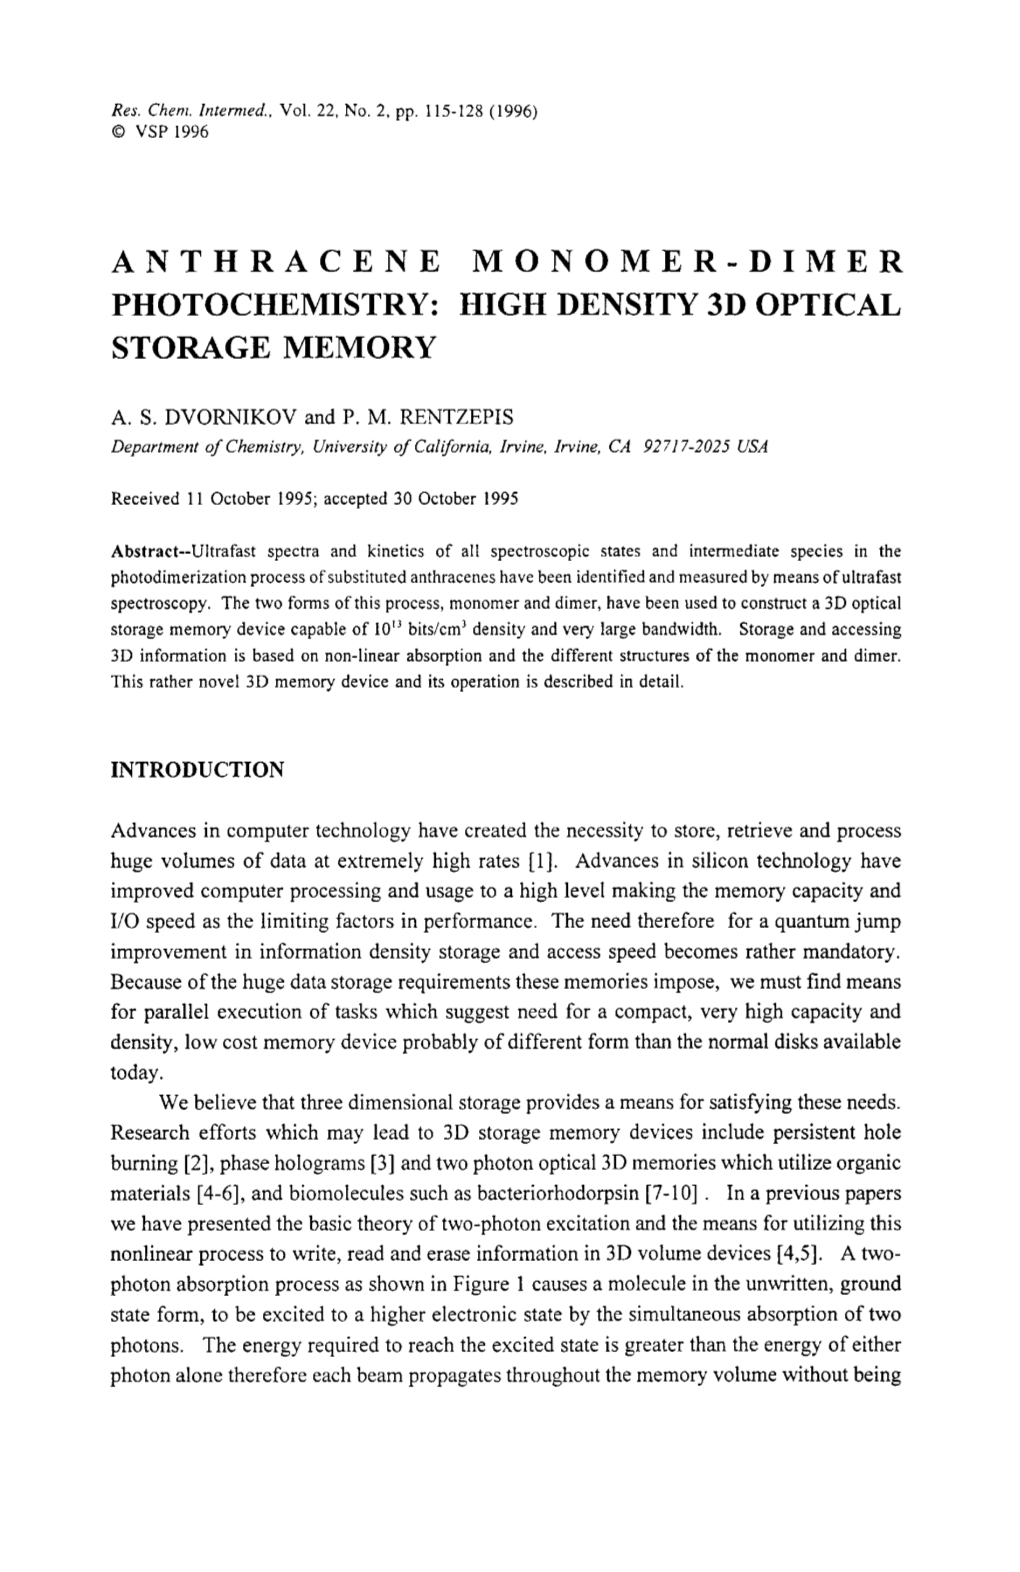 Anthracene Monomer-Dimer Photochemistry: High Density 3D Optical Storage Memory